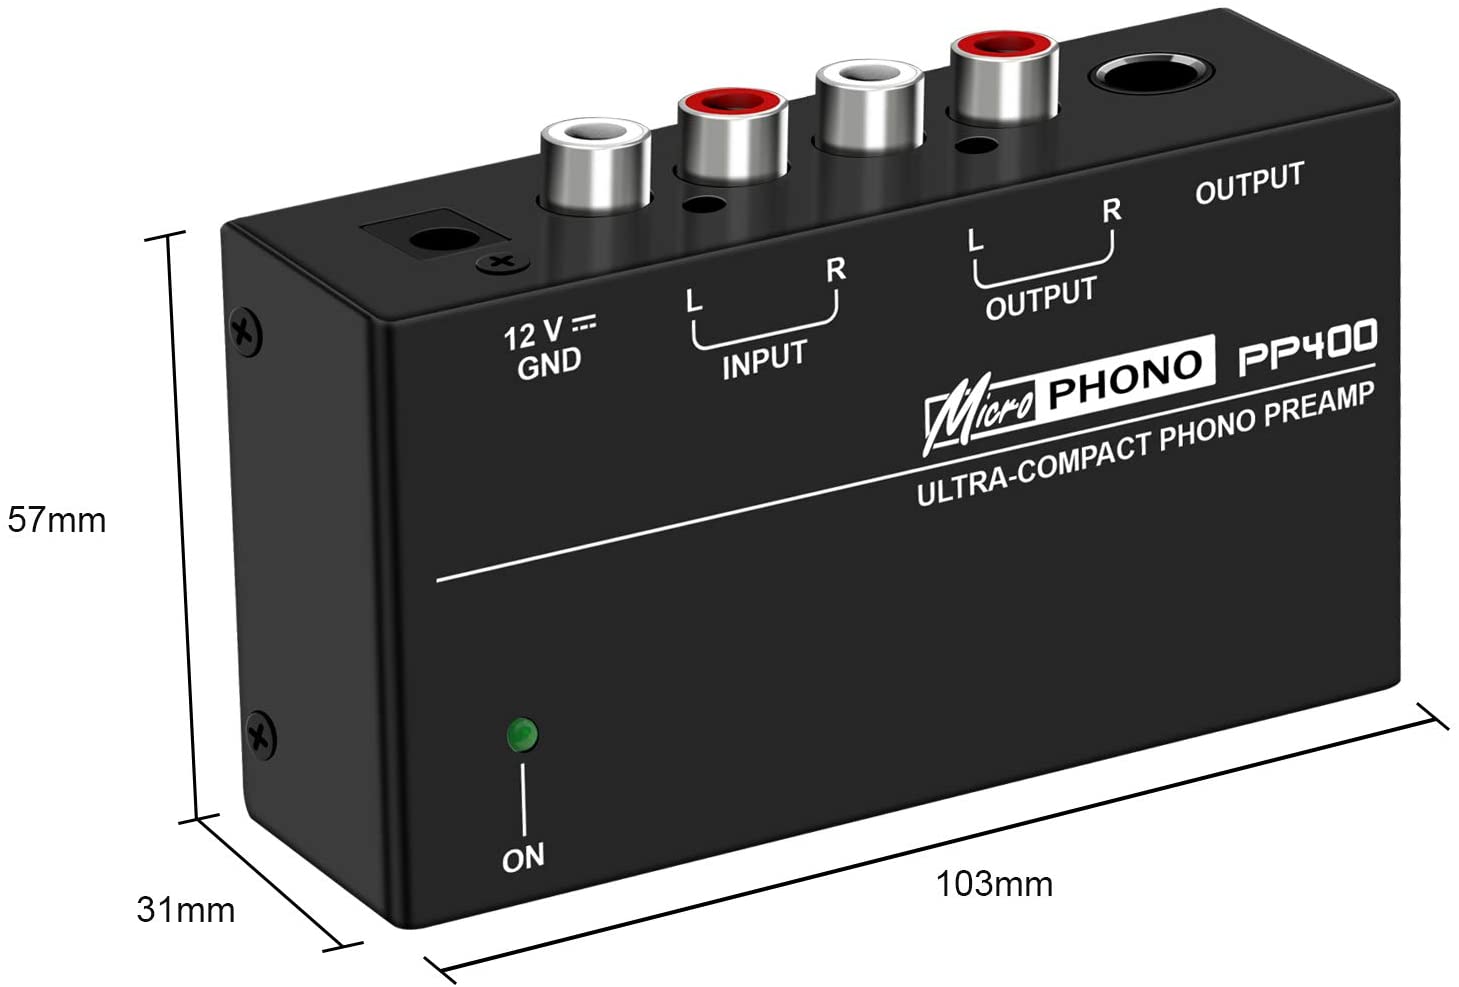 Buy Rybozen Phono Turntable Preamp - Mini Electronic Audio Stereo